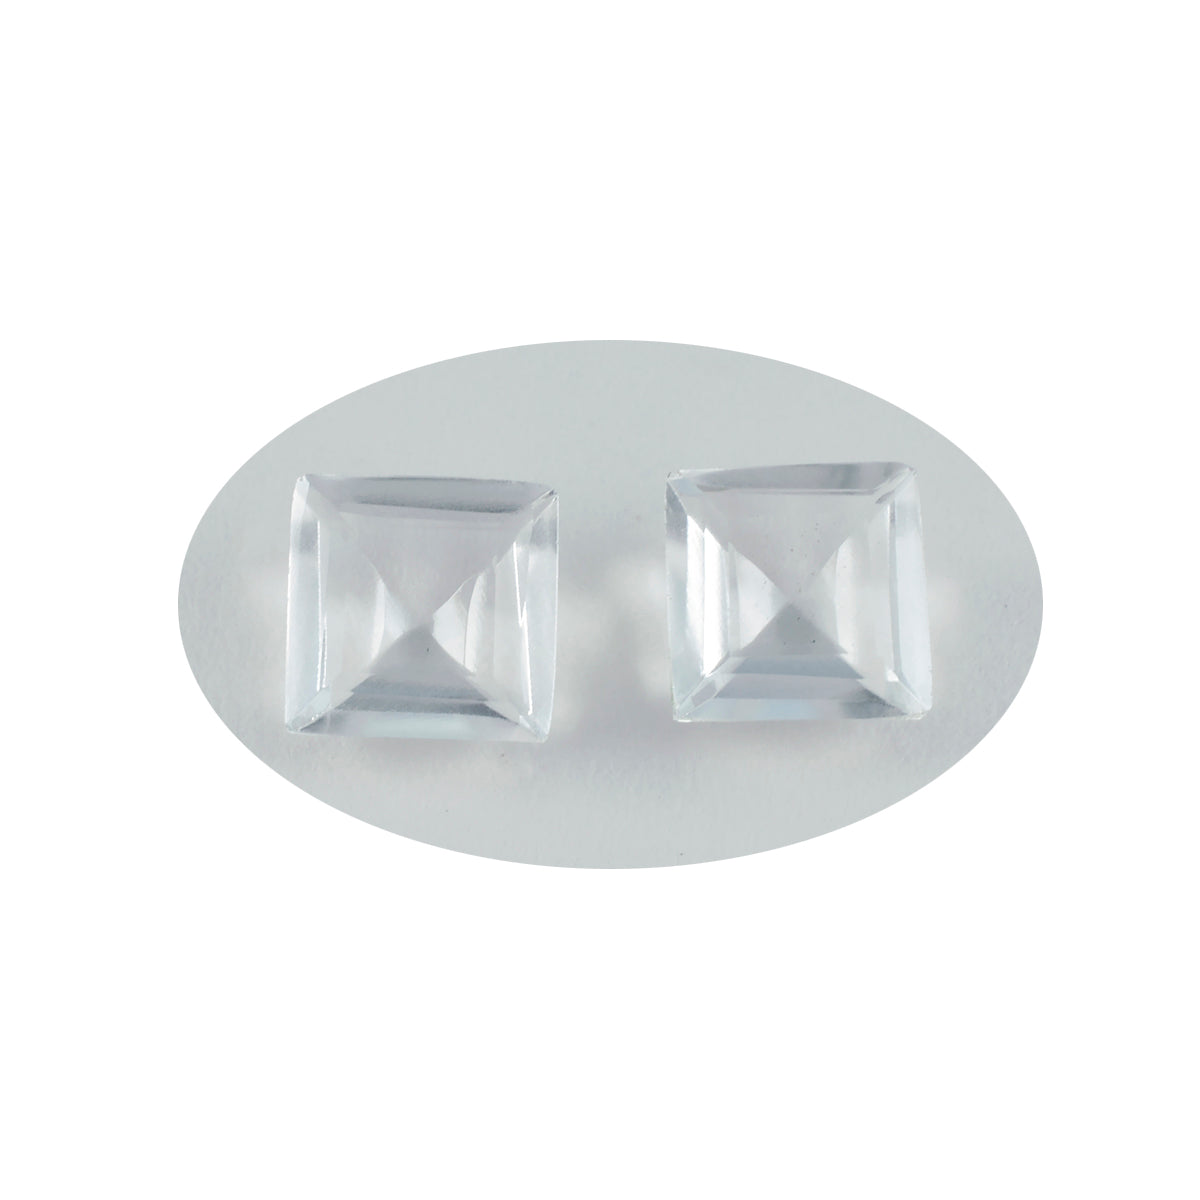 Riyogems 1PC wit kristalkwarts gefacetteerd 15x15 mm vierkante vorm fantastische kwaliteit losse edelsteen